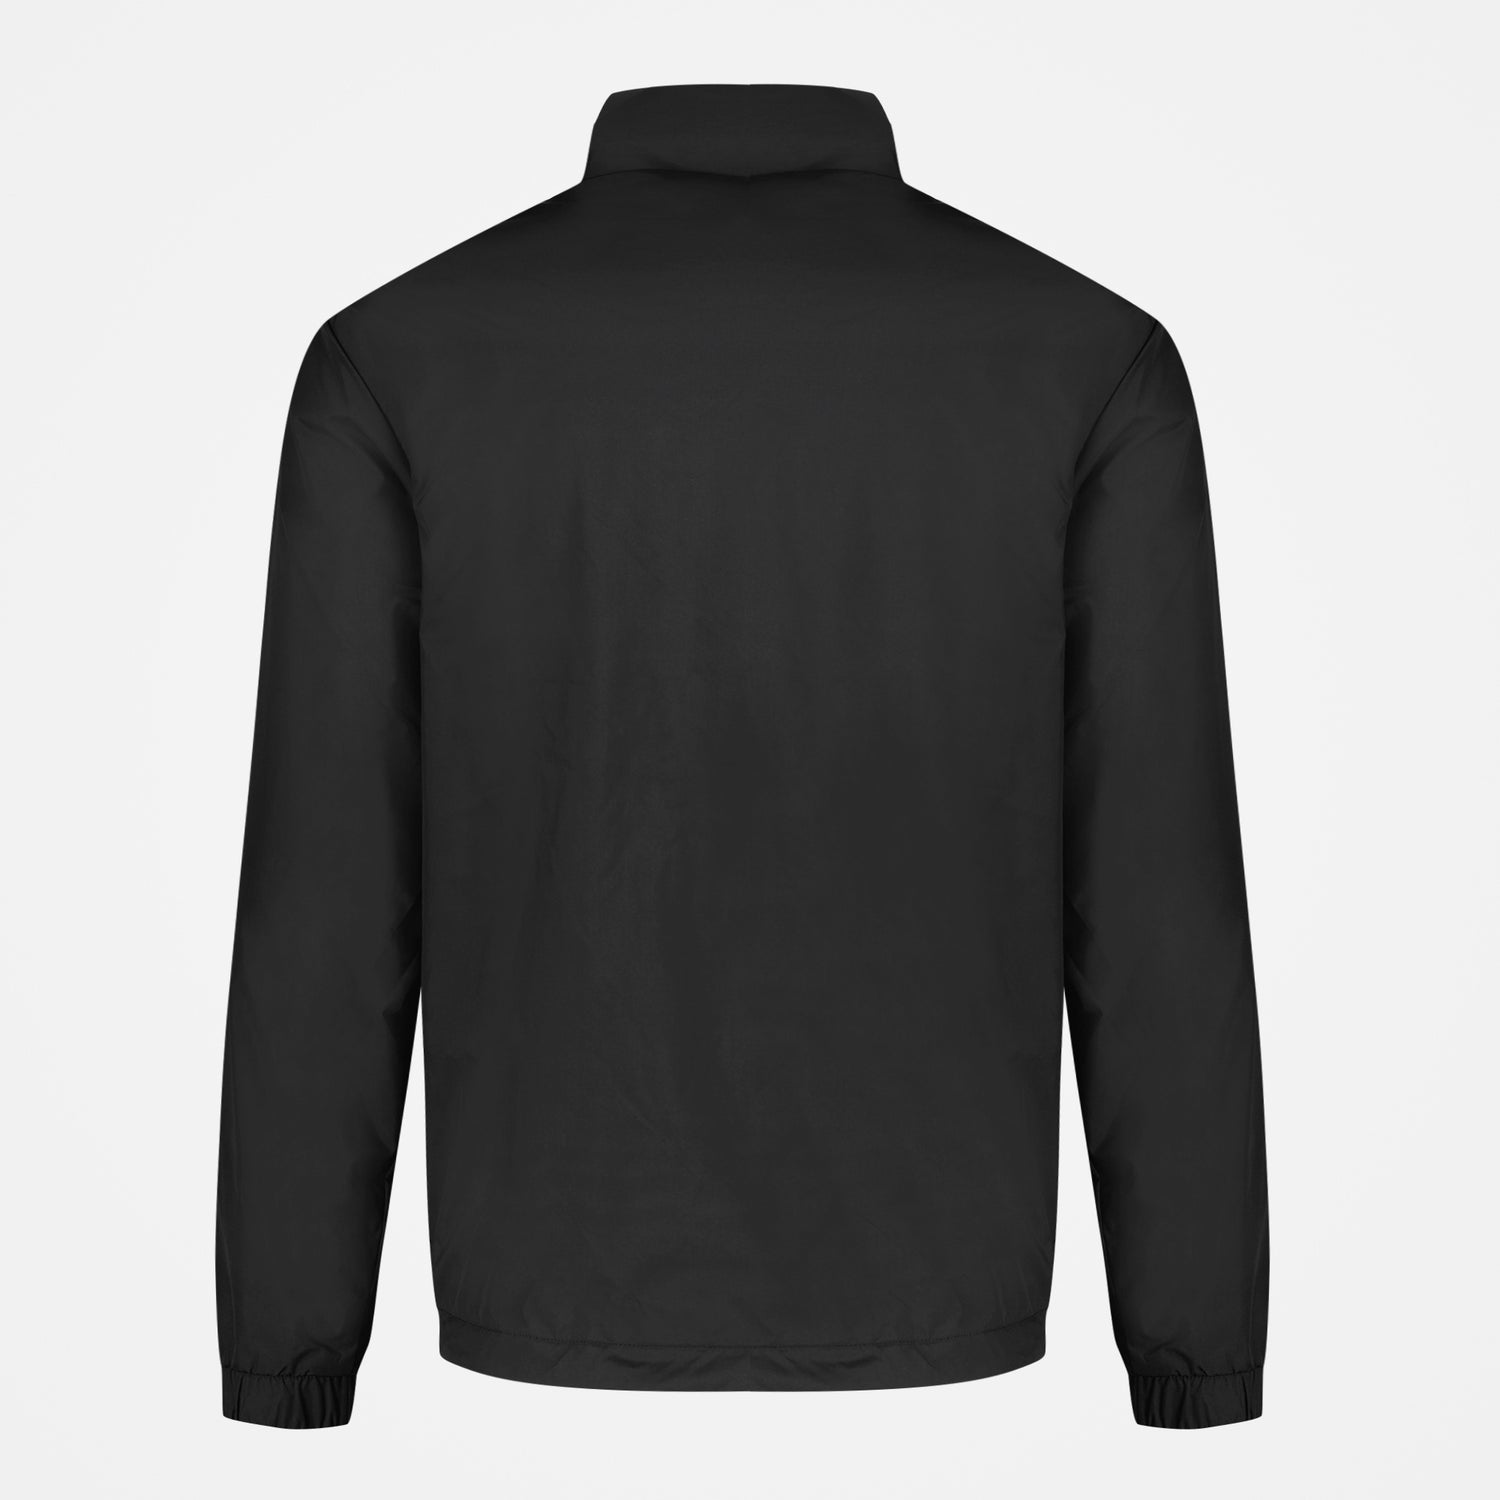 2220116-N°3 TRAINING Jacket Club M black  | Jacket for men